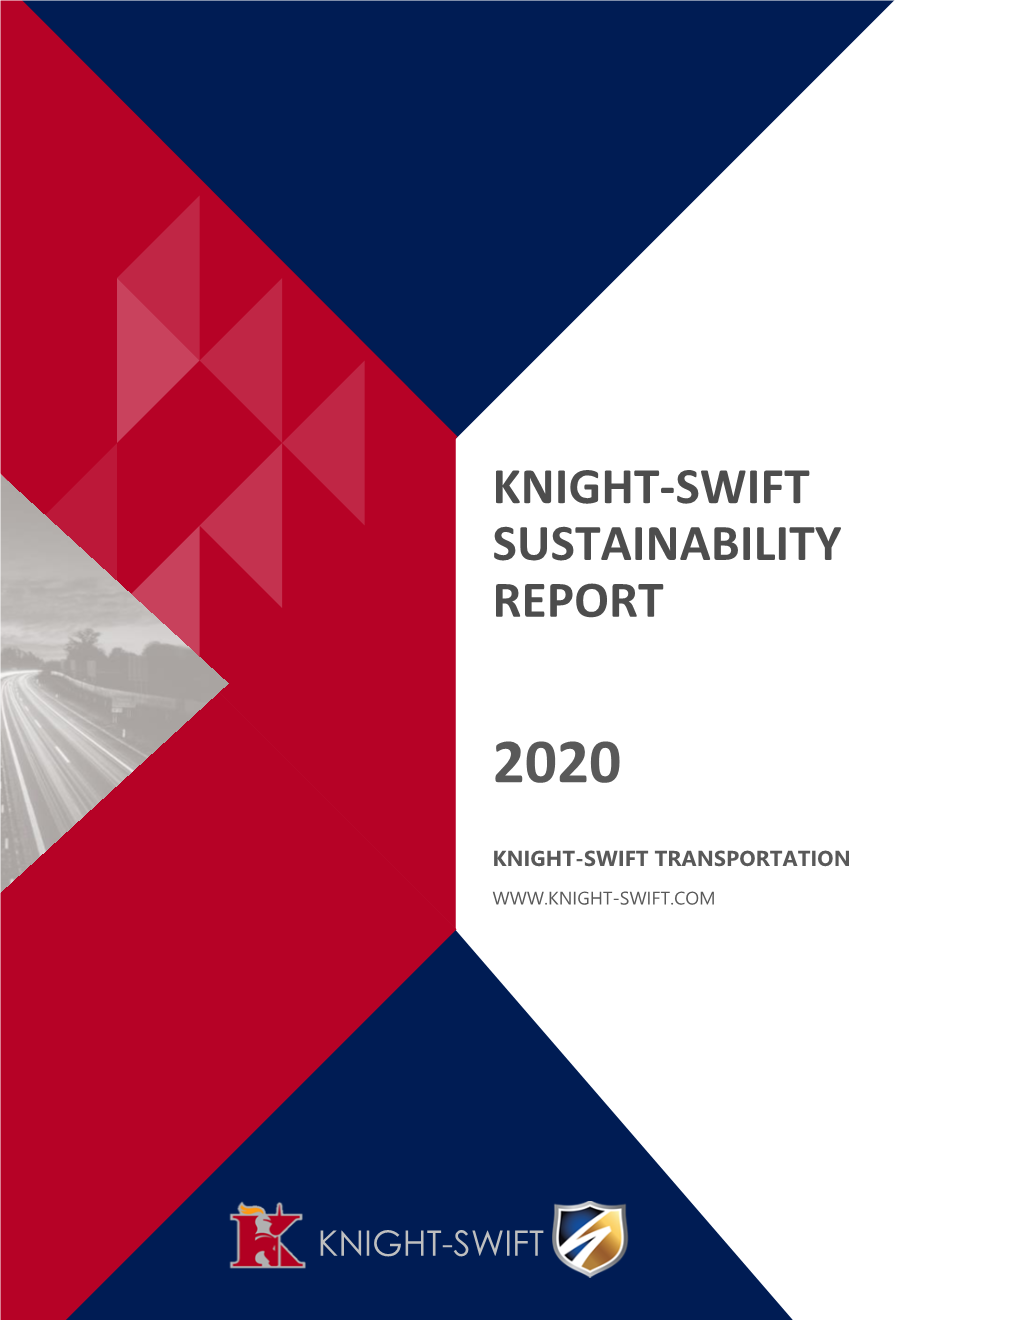 Knight-Swift Sustainability Report